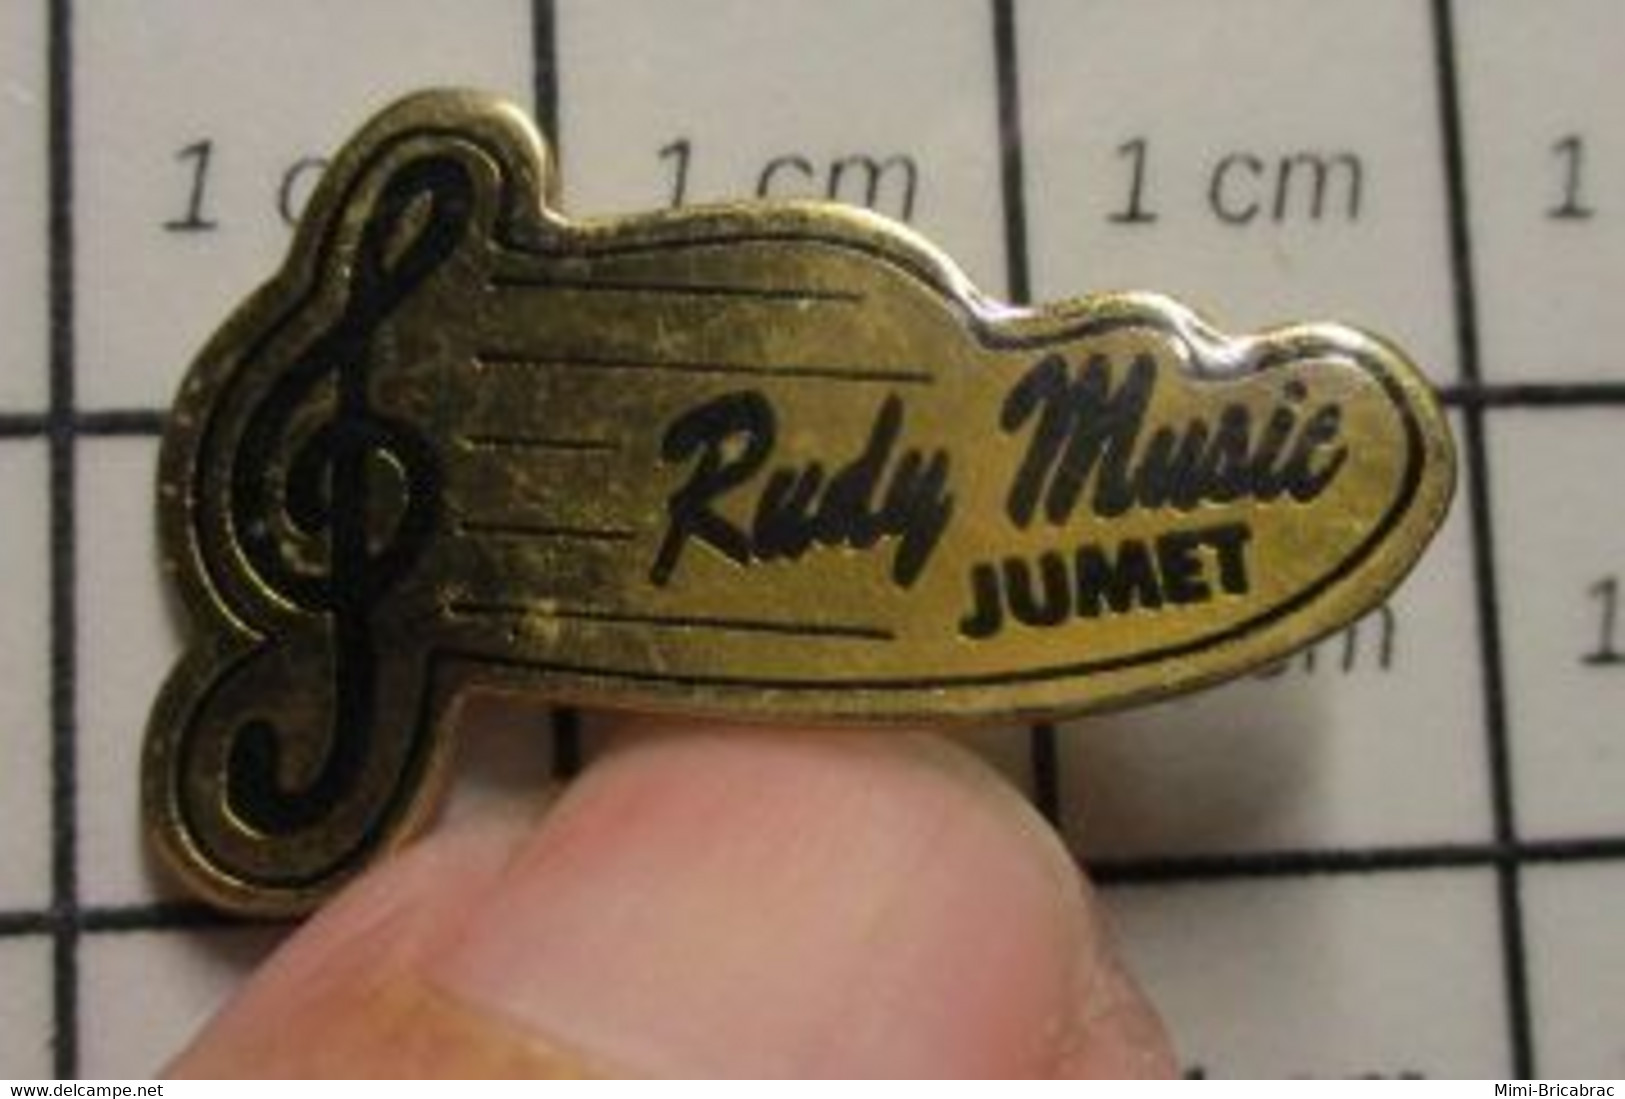 3317 Pin's Pins / Beau Et Rare / THEME : MUSIQUE / RUDY MUSIC JUMET - Musique